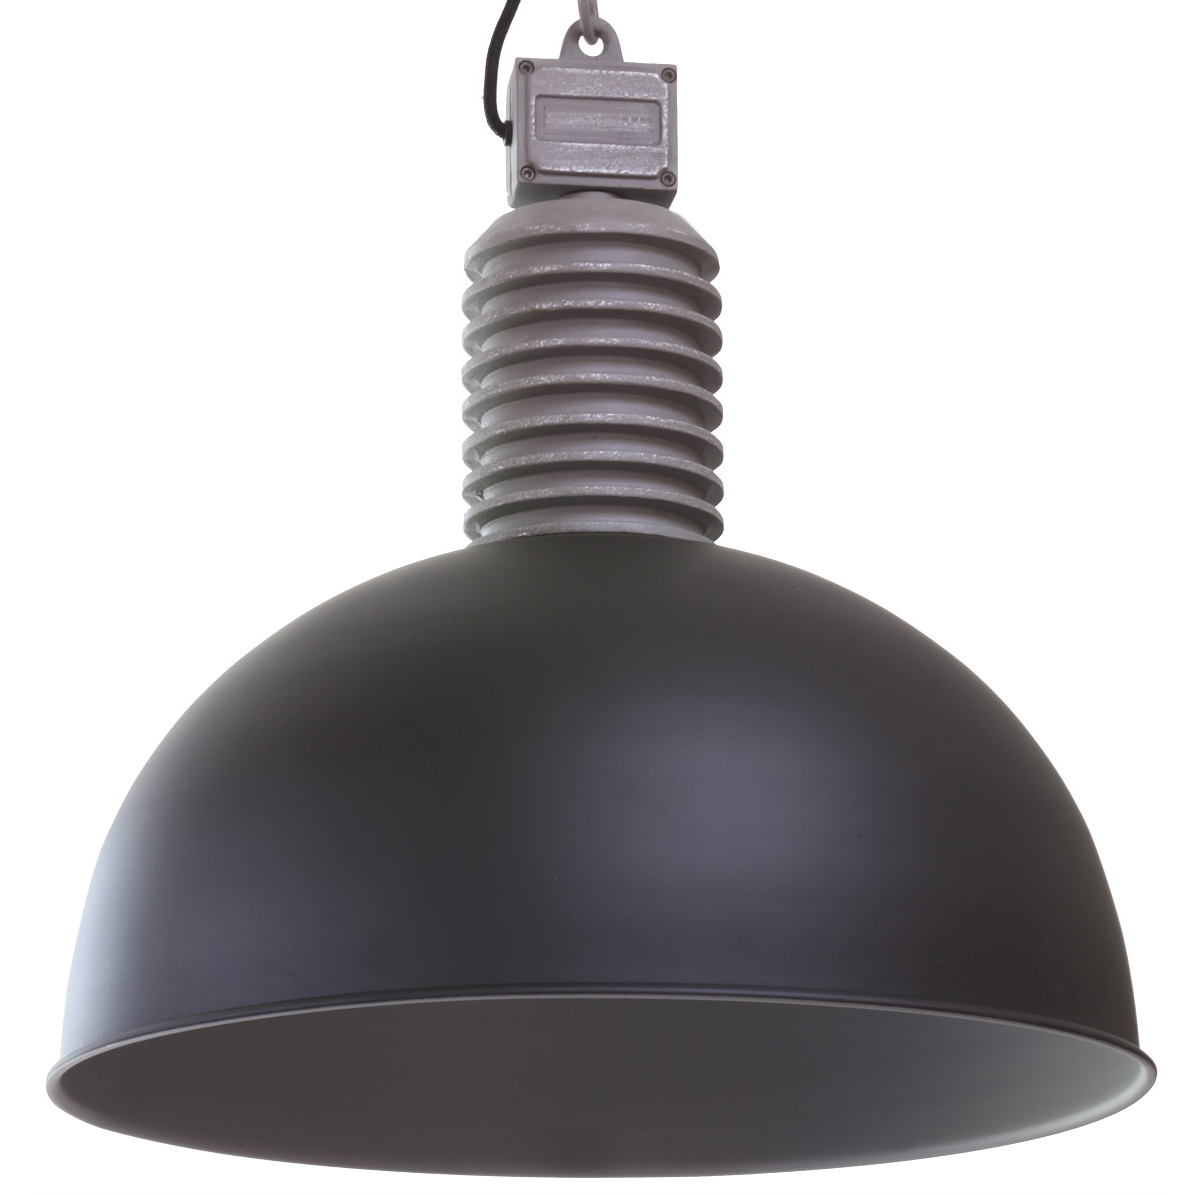 Gooi Wortel verdund LOS Hanging loft lamp with chain in industrial design - Casa Lumi